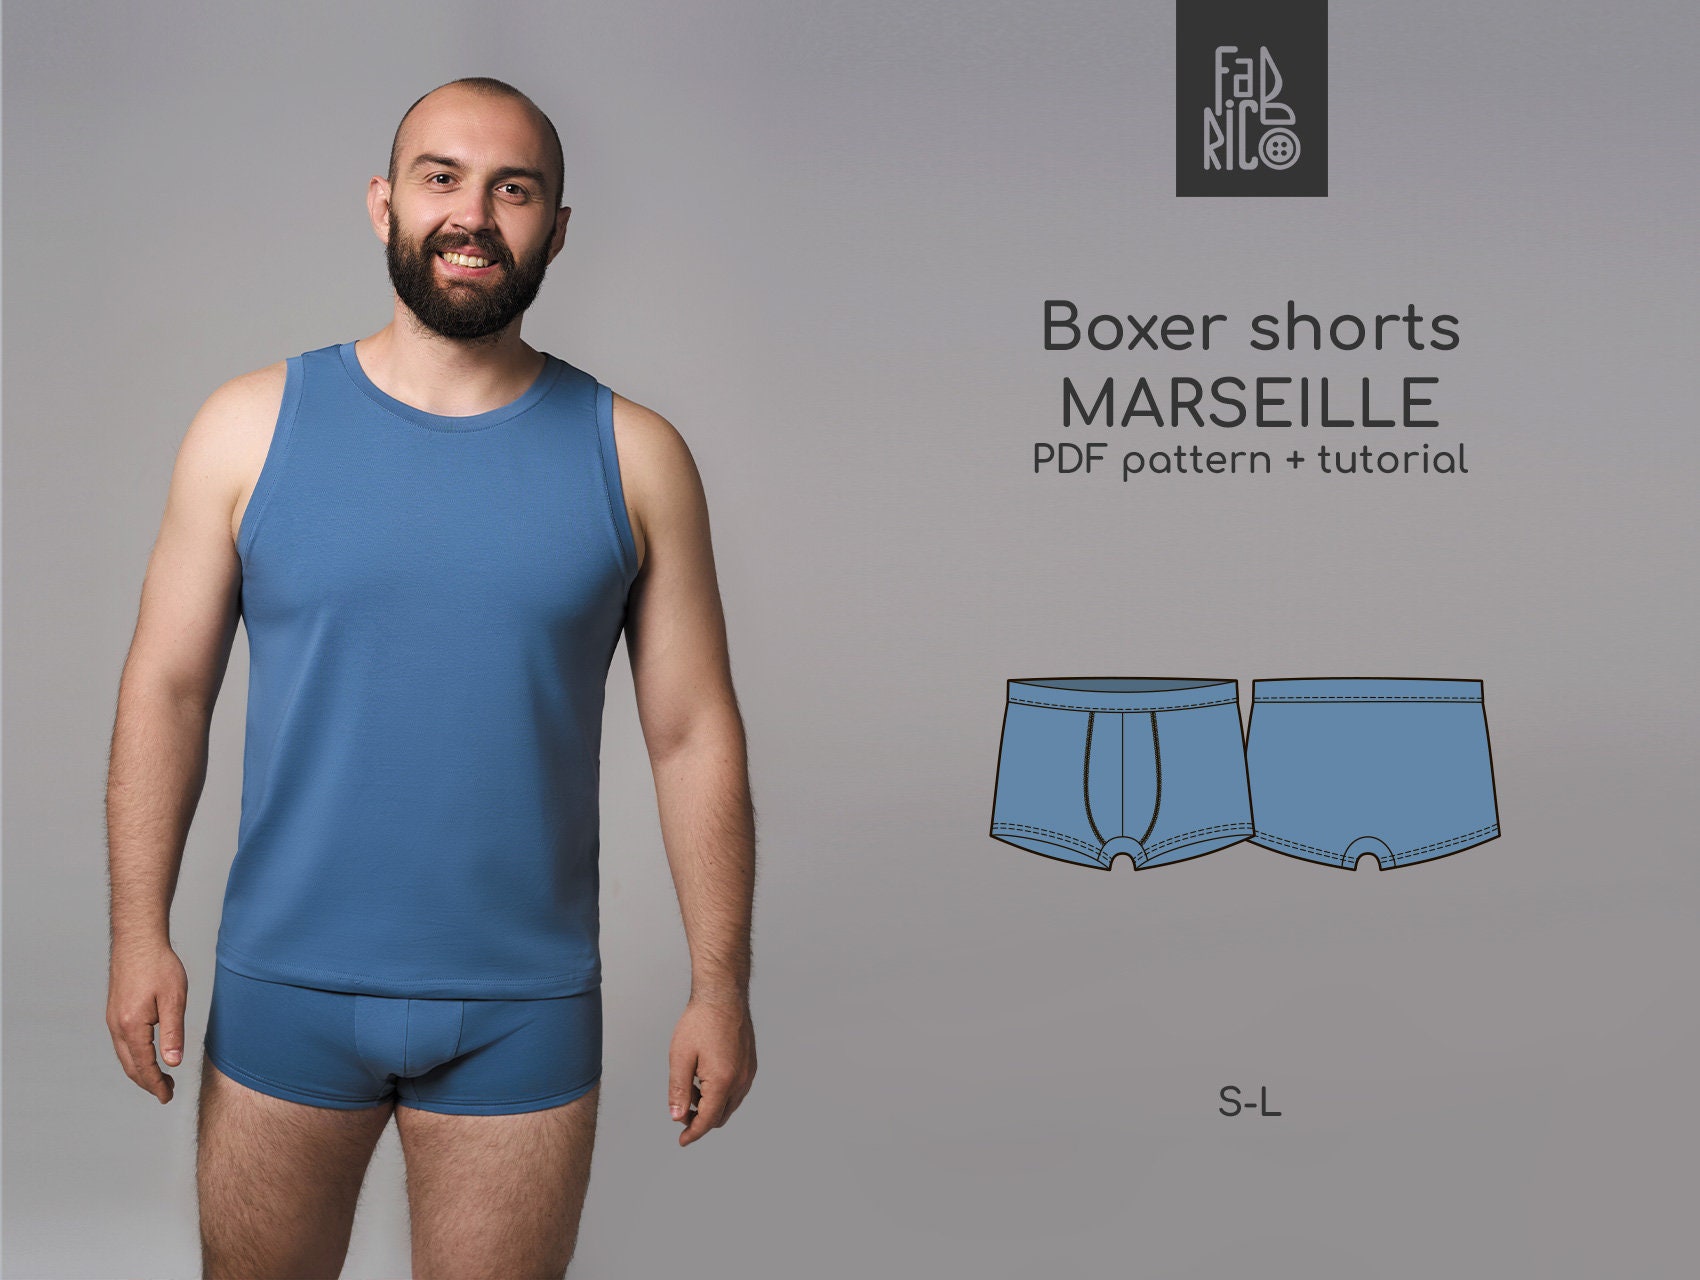 Men's Dual Pouch Boxer Brief Sewing Pattern PDF 